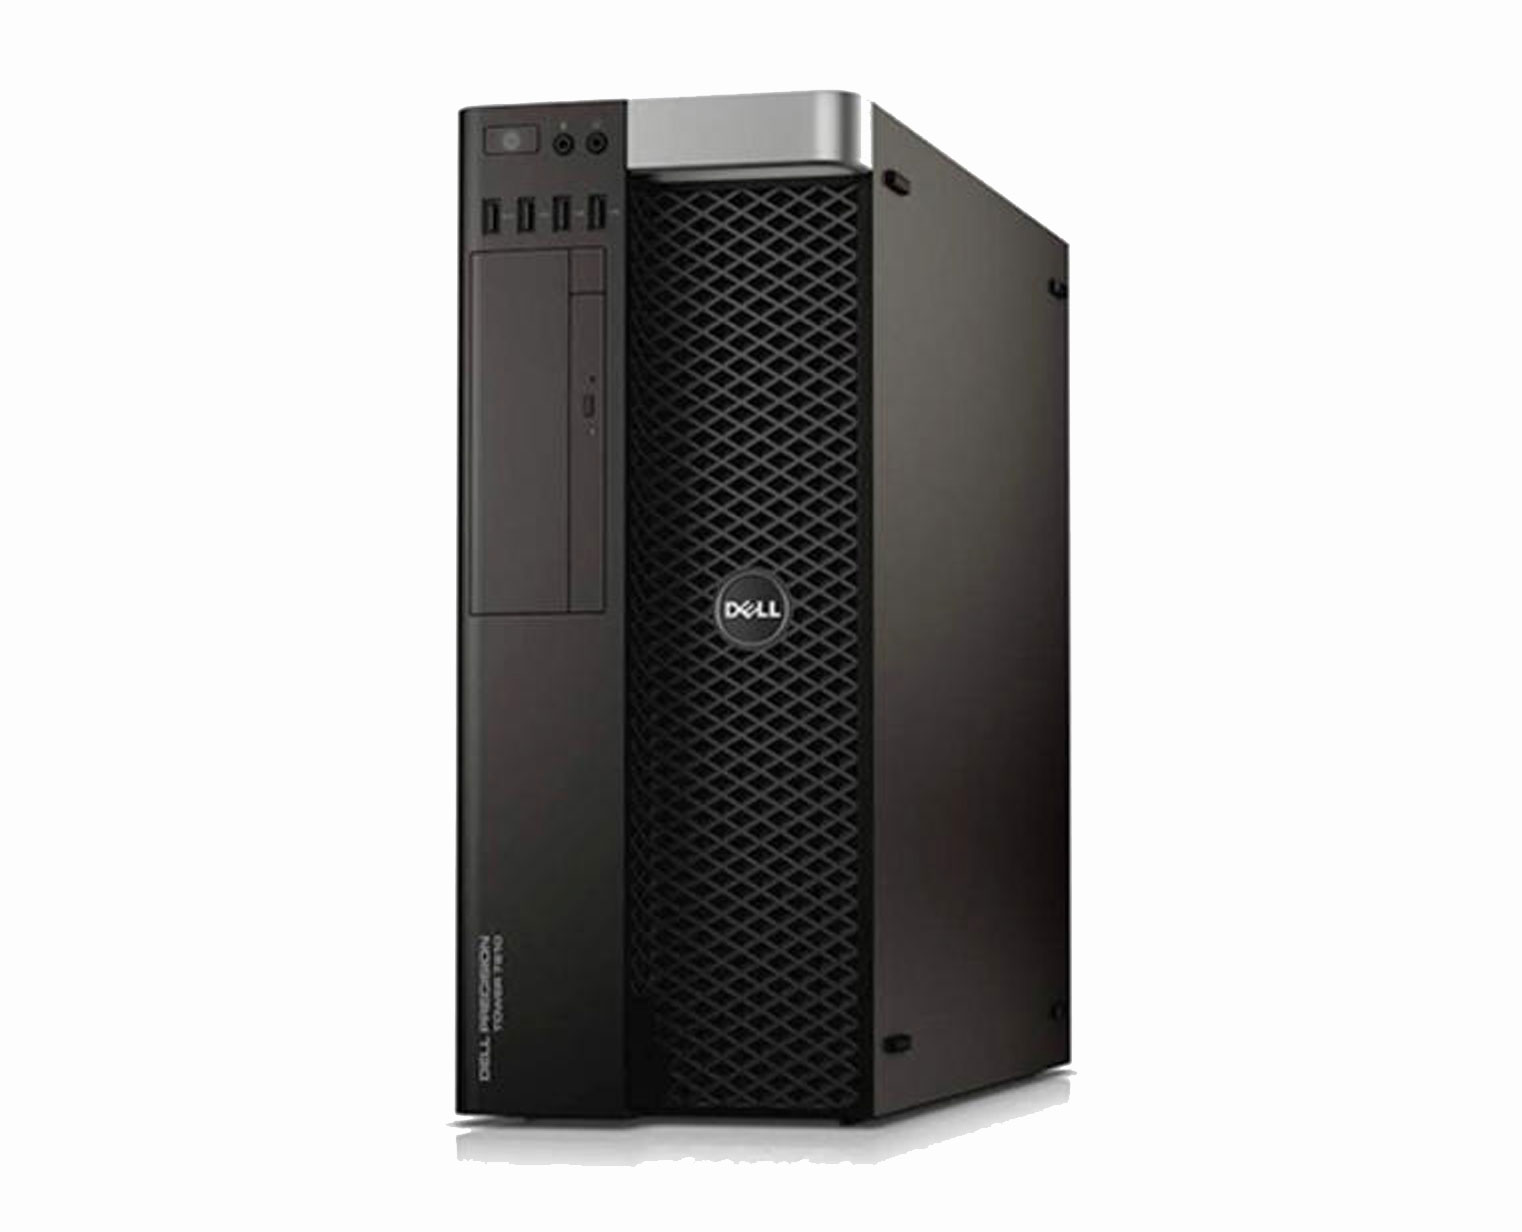 Advanced Performance - Dell Precision Tower 7000 Series